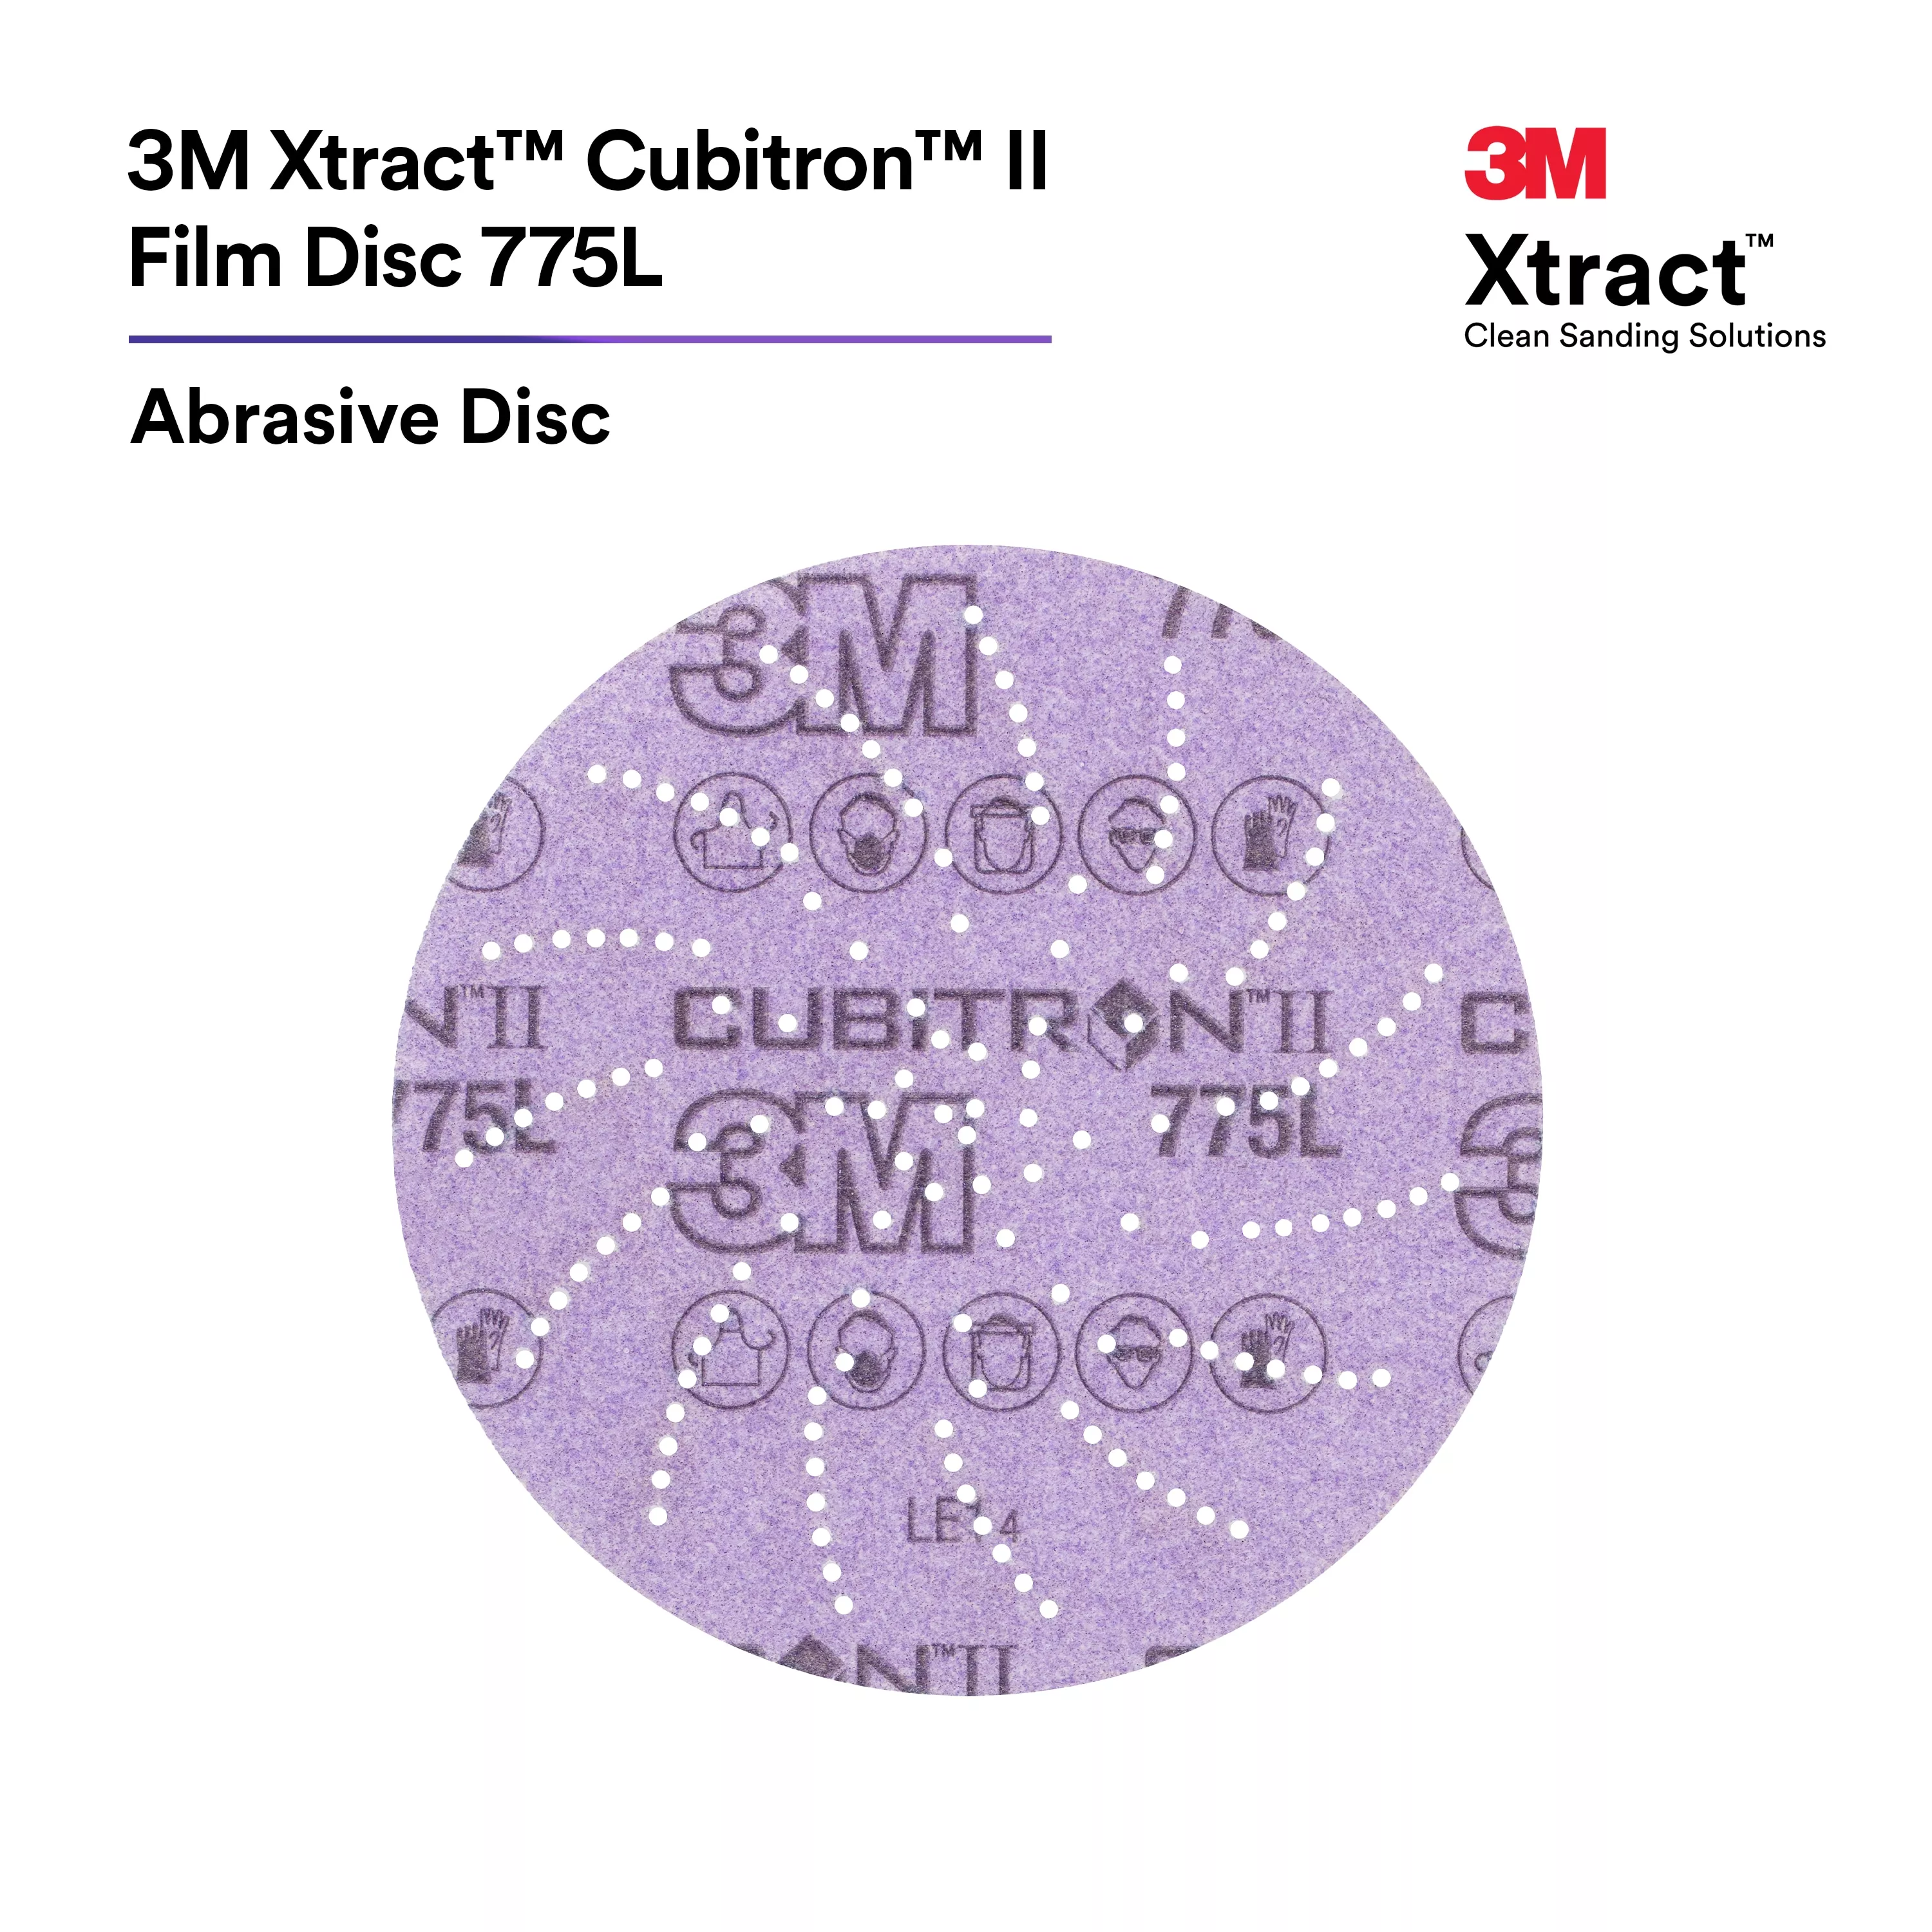 SKU 7100064175 | 3M Xtract™ Cubitron™ II Film Disc 775L